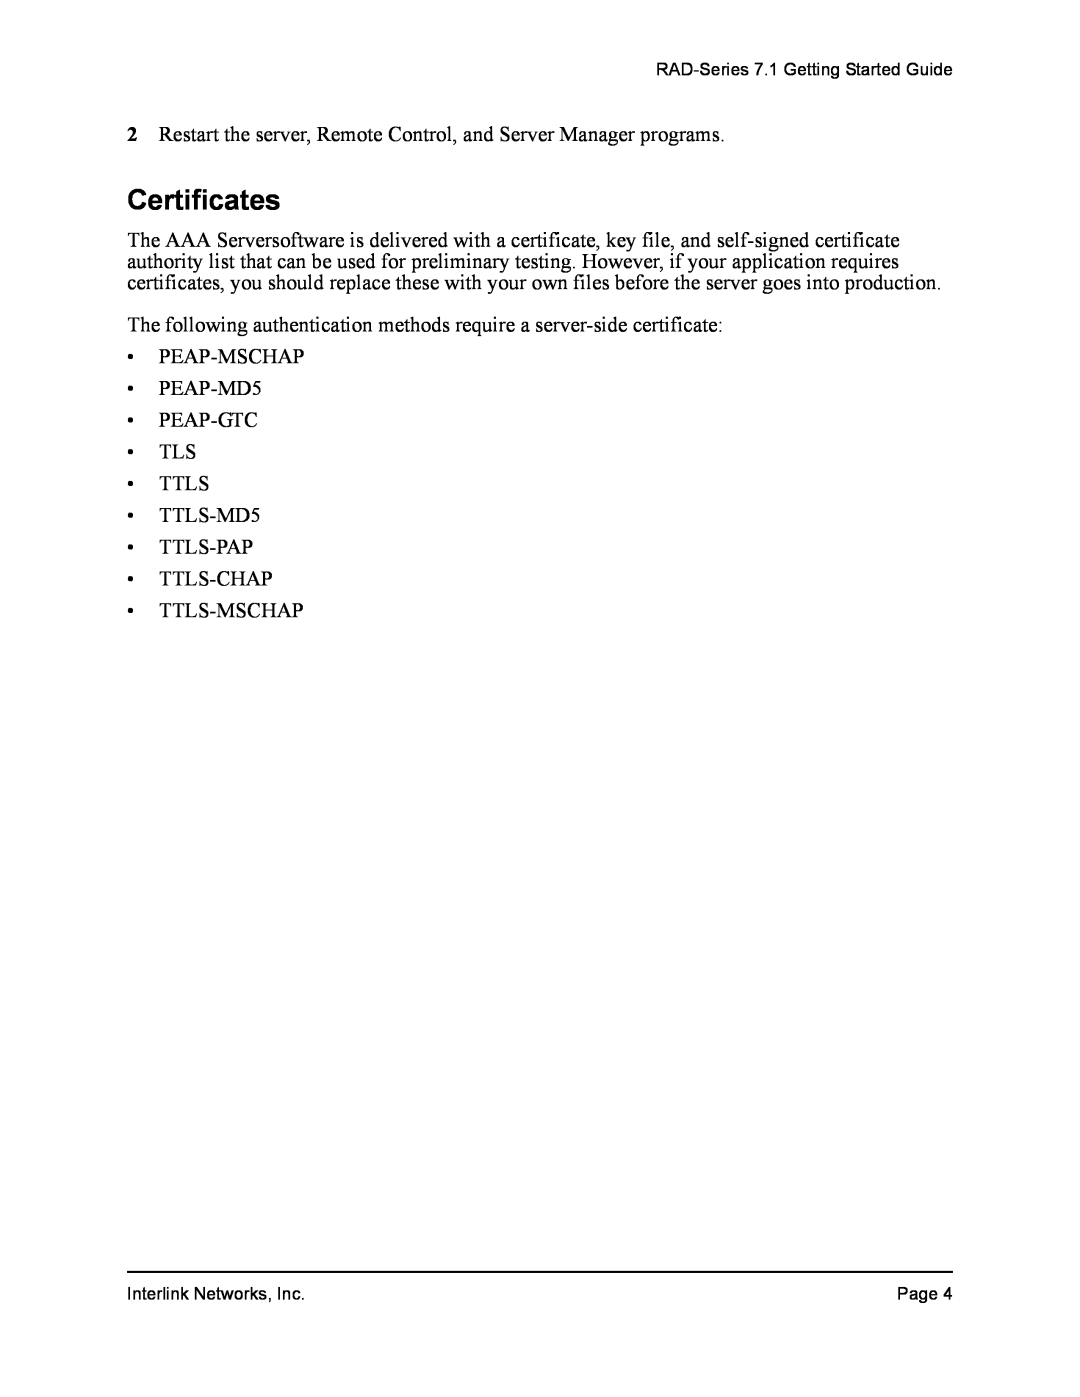 Interlink electronic 7.1 manual Certificates 